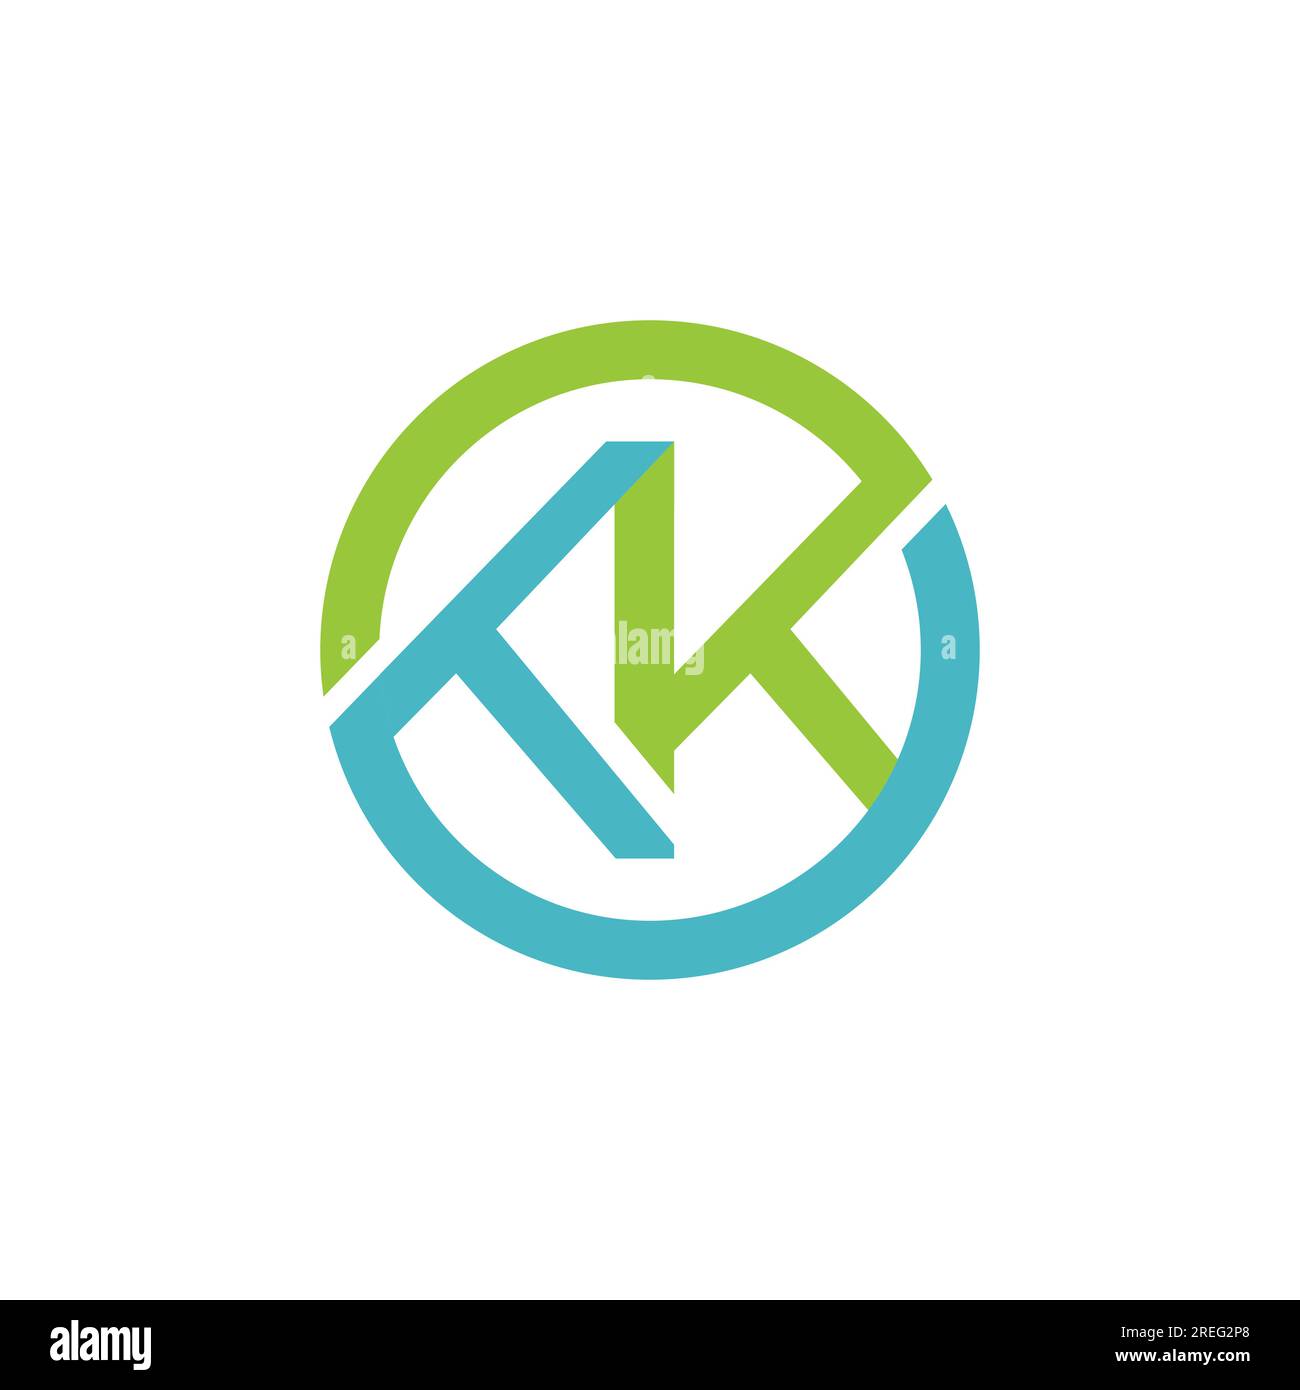 Logo KK iniziale - Logo vettoriale minimale. Logo KK Premium, logo KK Letter con design moderno e alla moda. Logo KK Modern Illustrazione Vettoriale